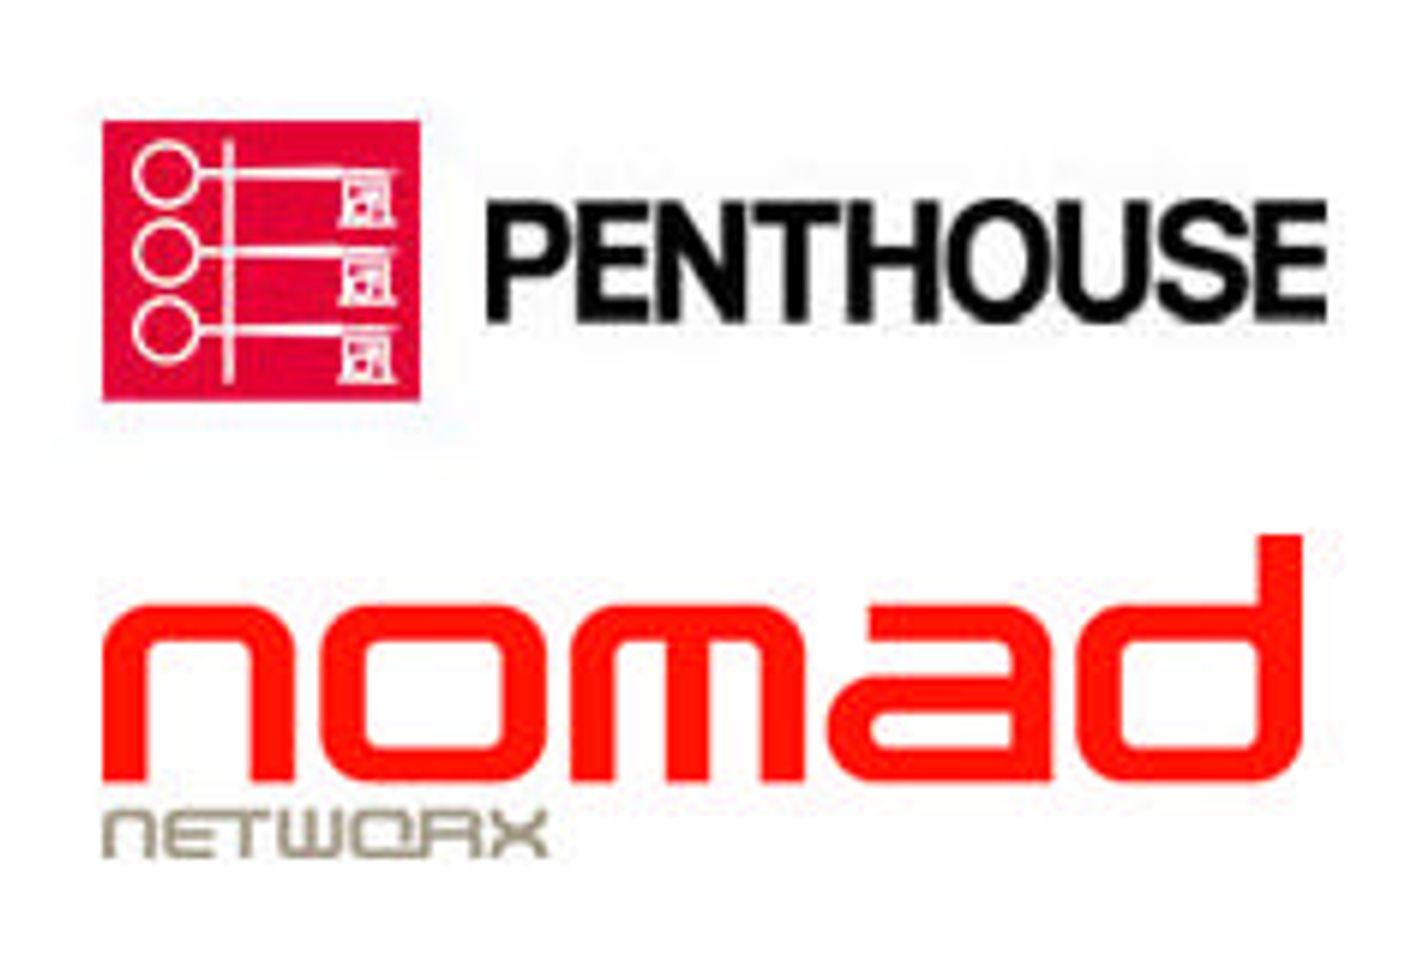 Penthouse, Nomad NetworX Ink Oz, NZ Distribution Deal